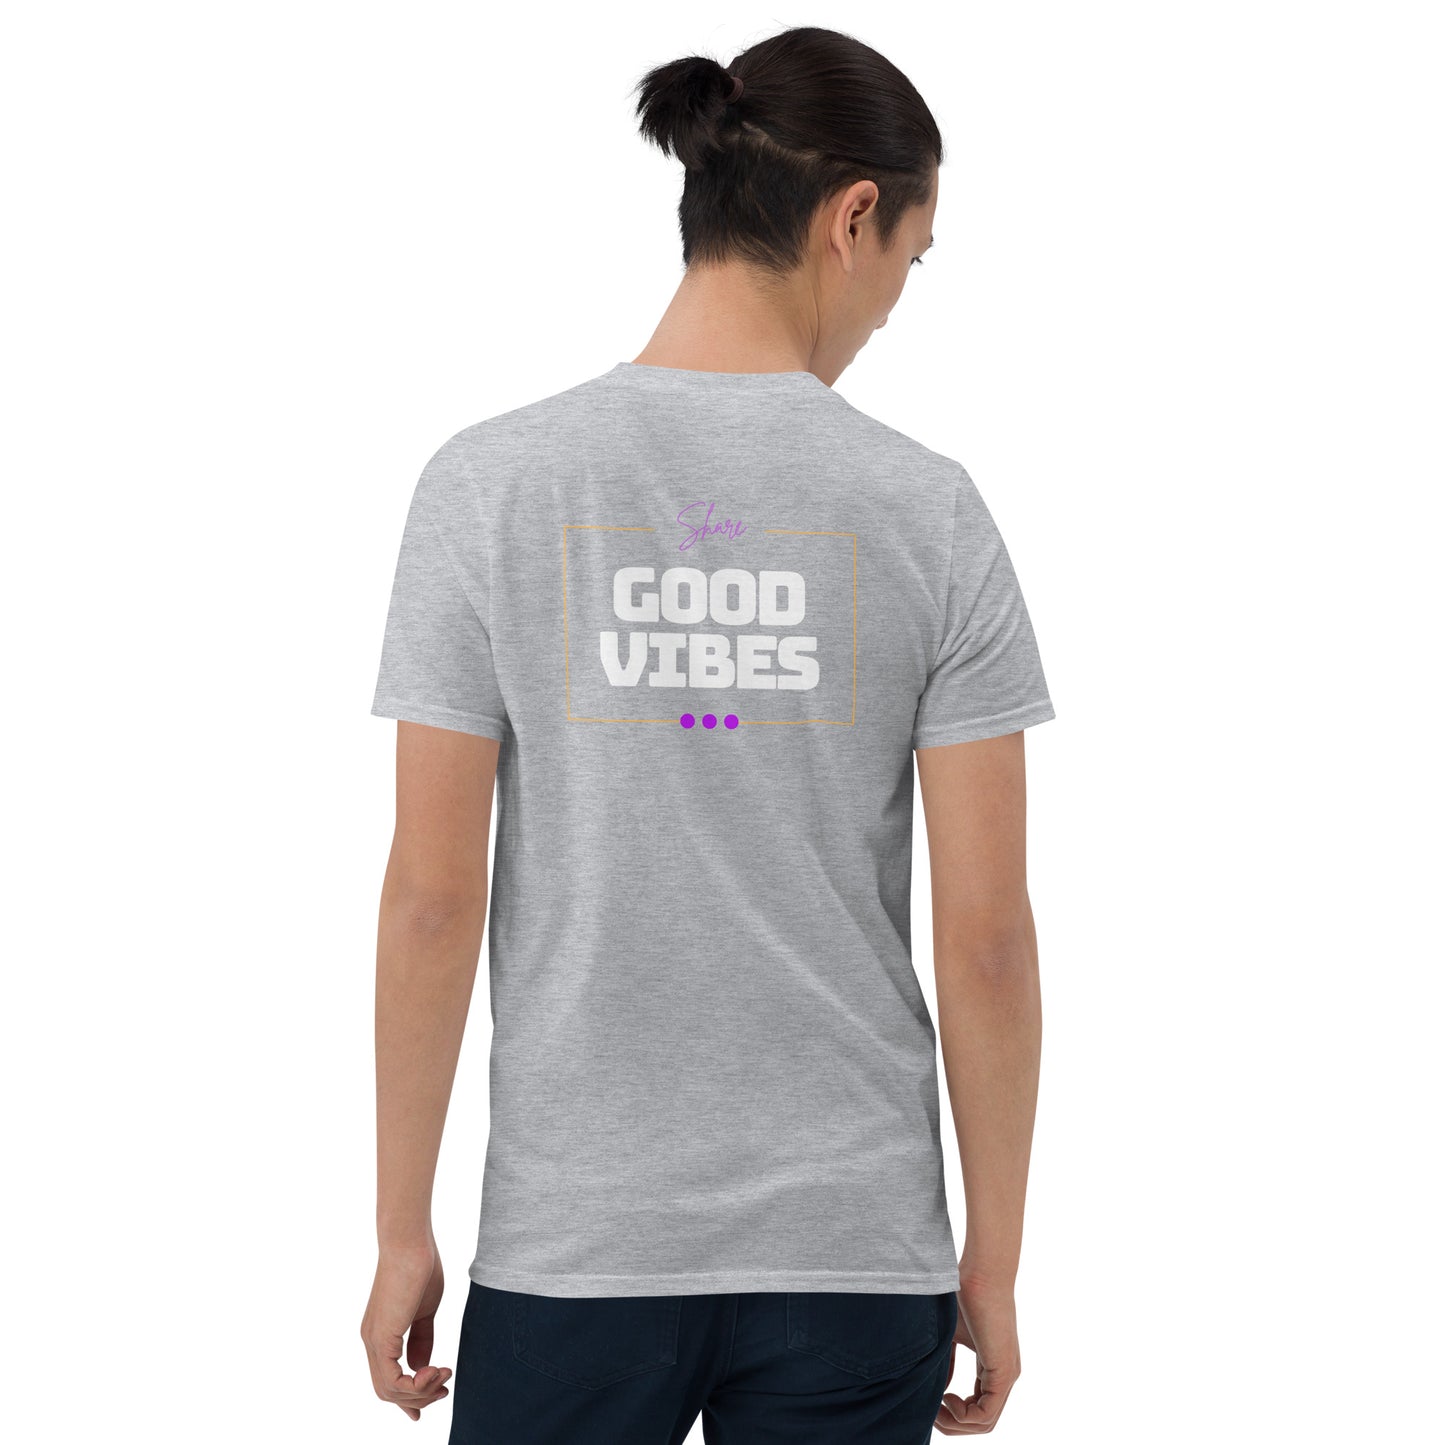 Share Good Vibes Unisex T-Shirt